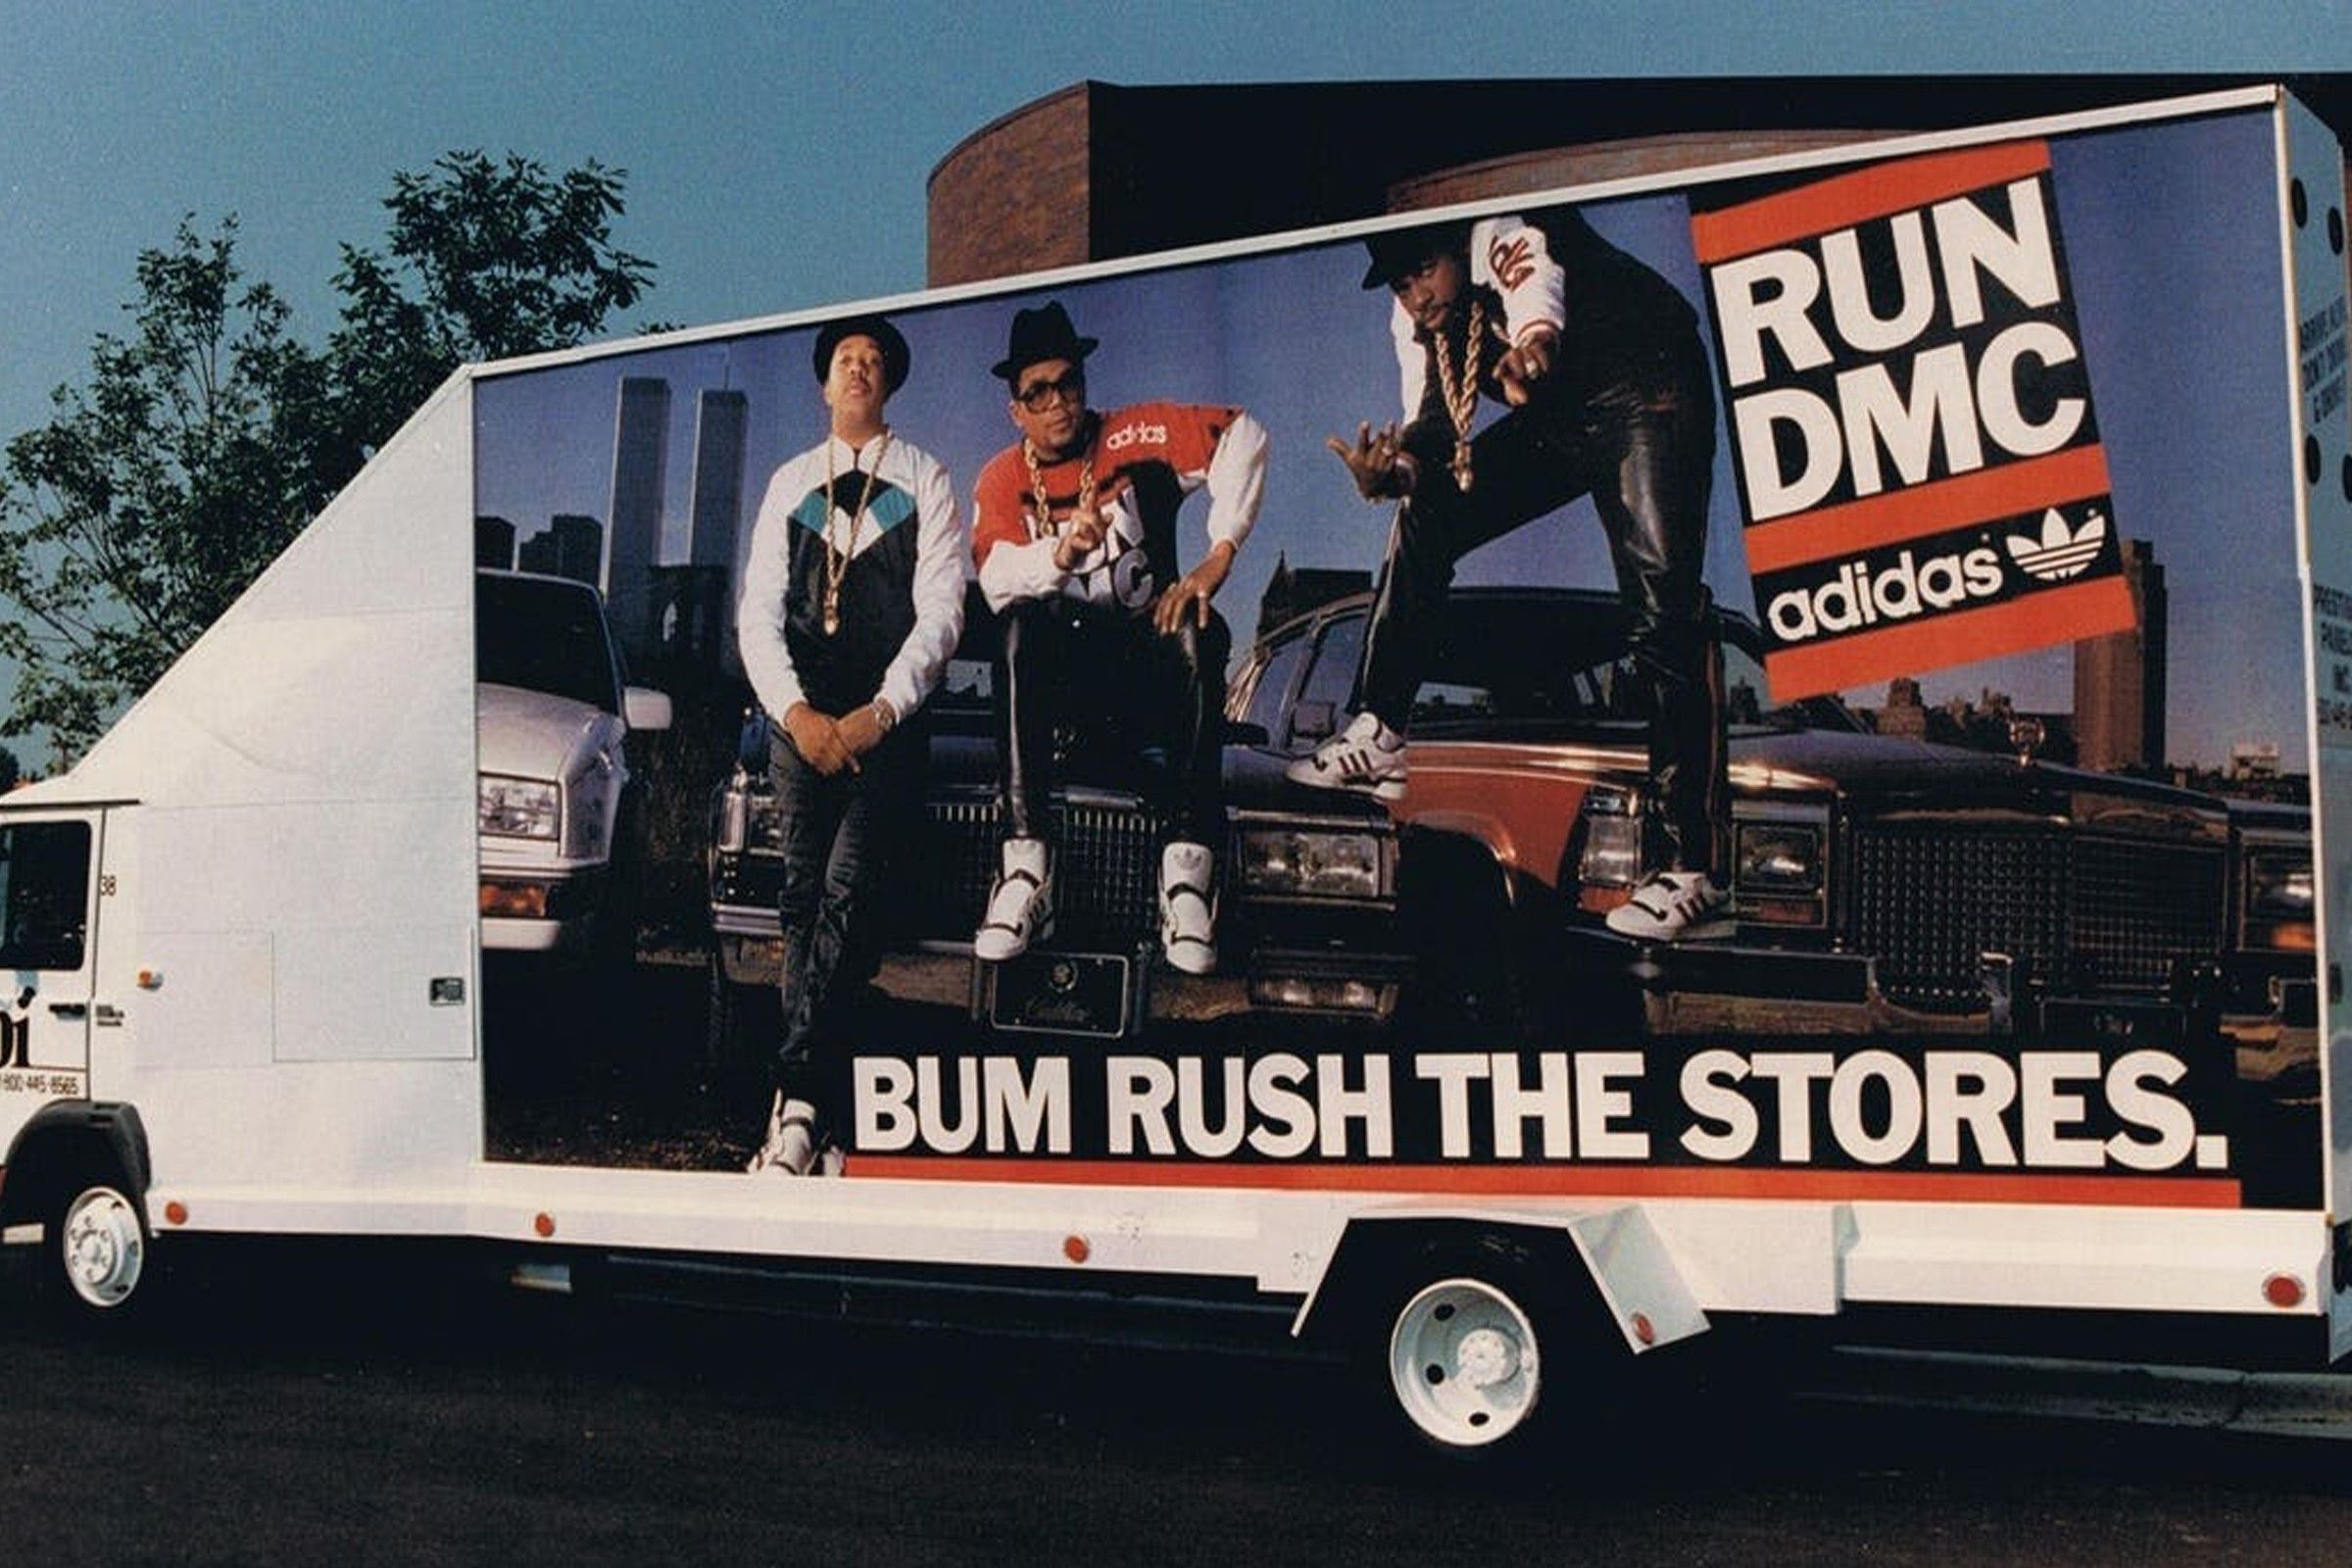 A Run-DMC adidas ad on the side of a truck